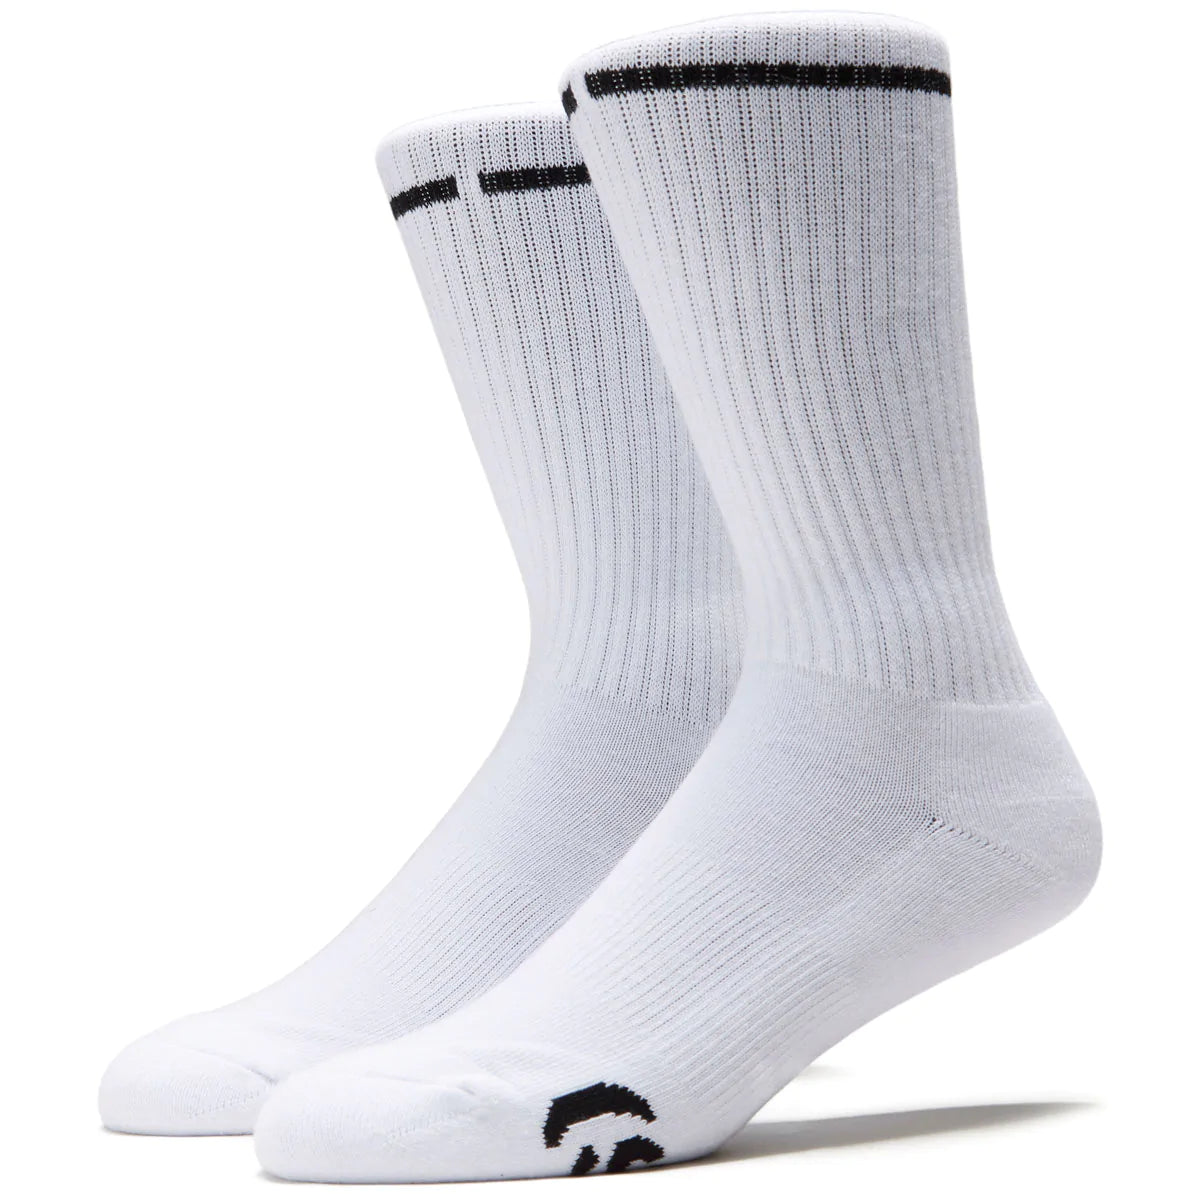 CCS Primary Socks - White/Black image 1